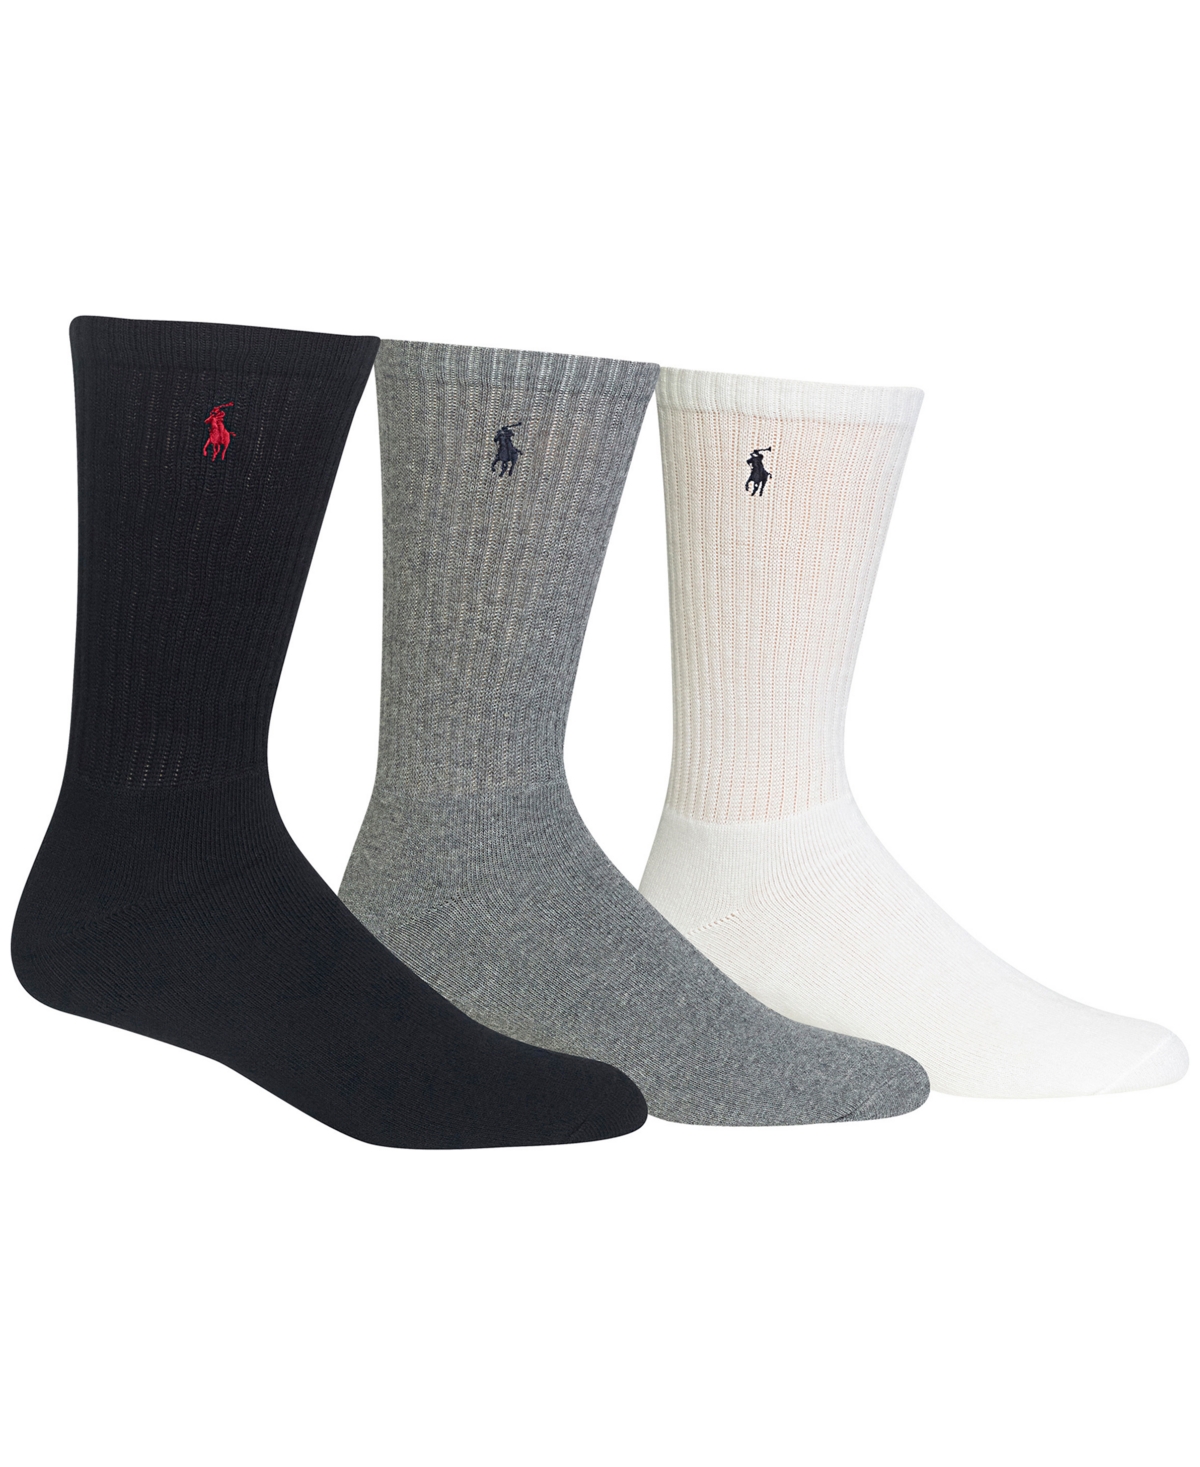 Polo Ralph Lauren Men's Socks, Extended Size Classic Athletic Crew 3 Pack In Black,grey,white